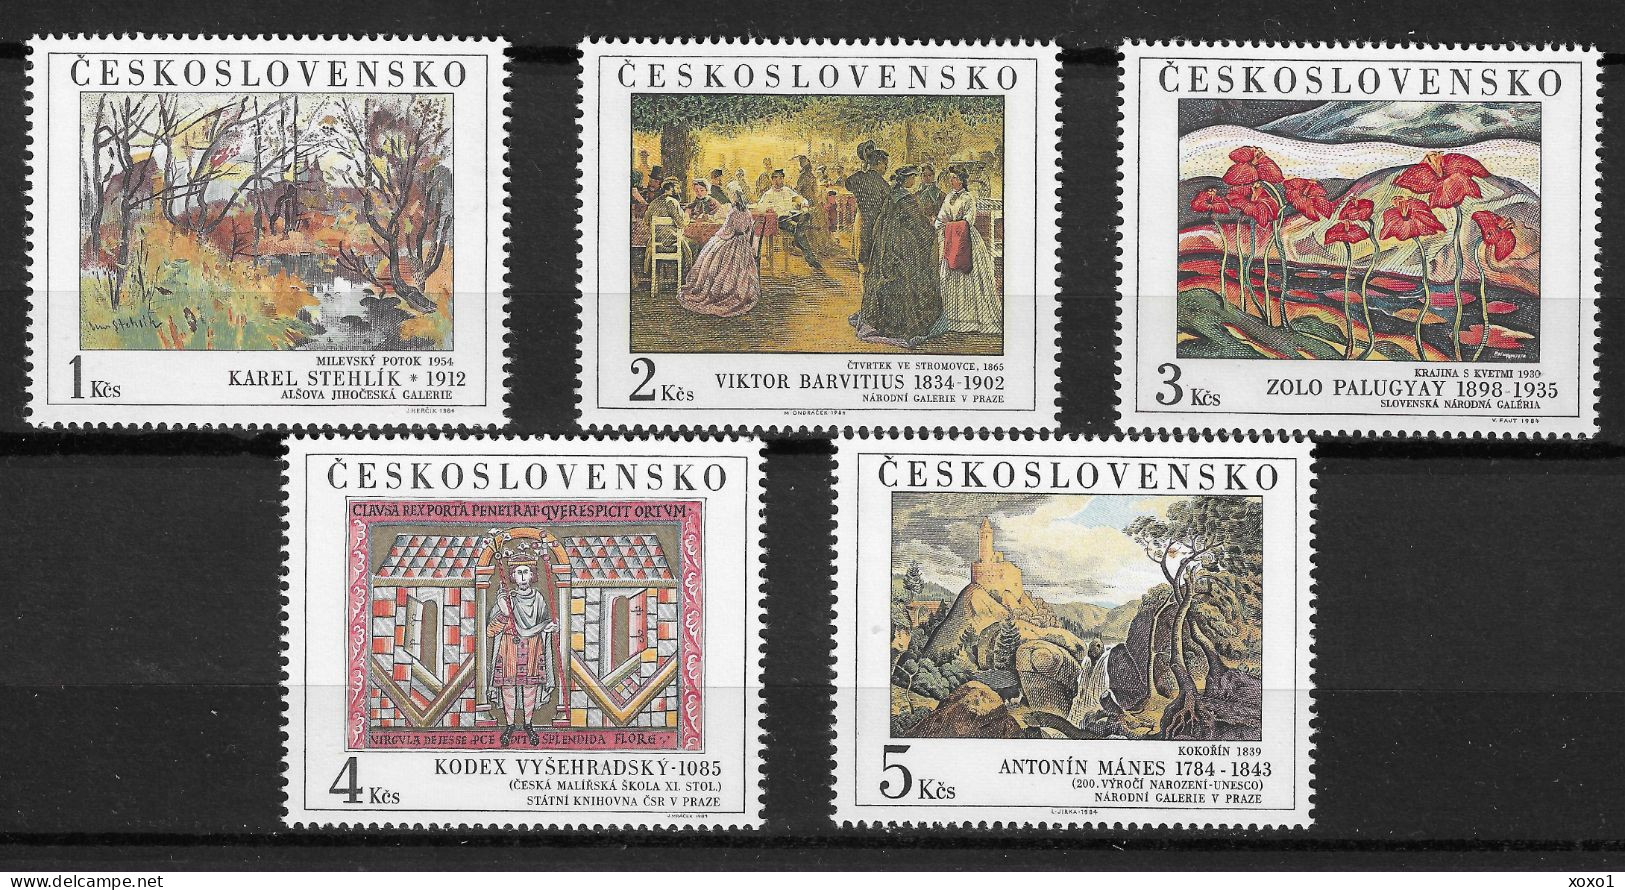 Czechoslovakia 1984 MiNr. 2789 - 2793 National Galleries (XVII) Art, Painting, Modern 5V  MNH**  8.50 € - Unused Stamps